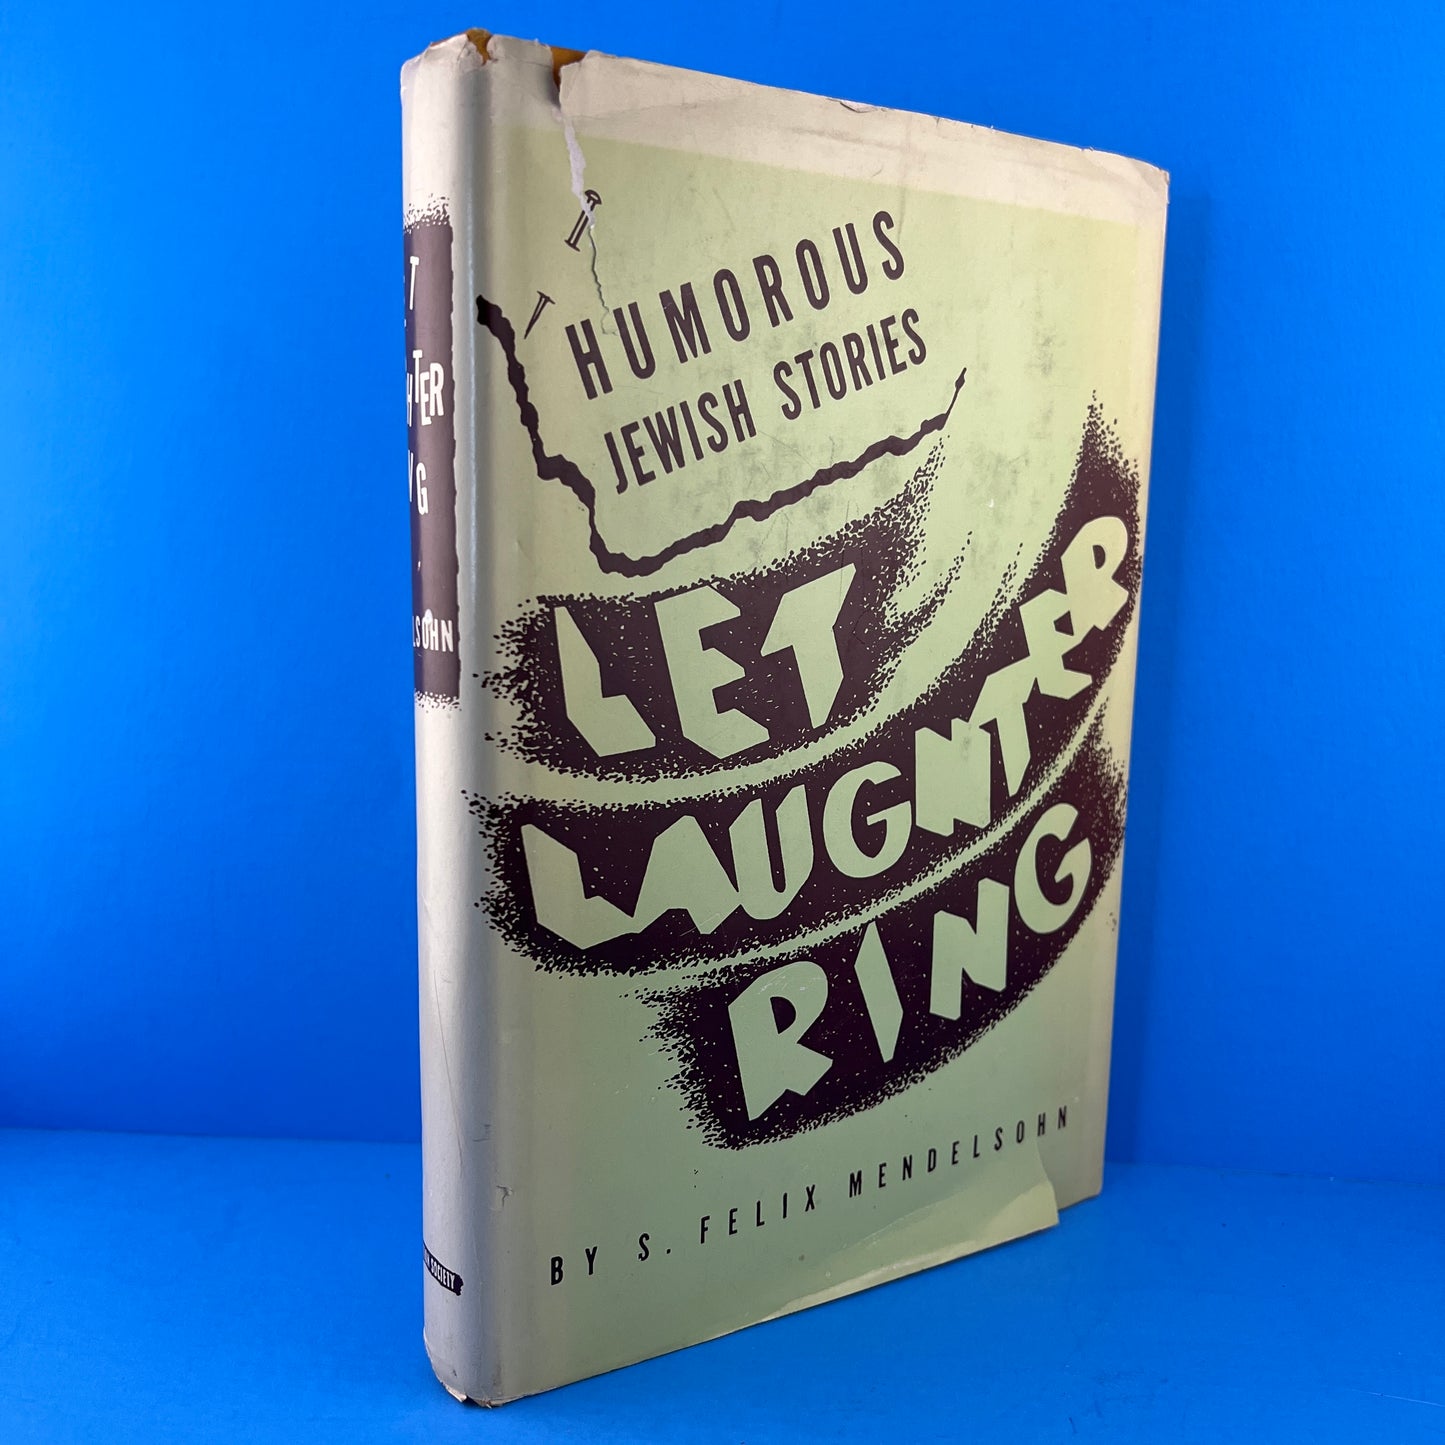 Let Laughter Ring: Humorous Jewish Stories